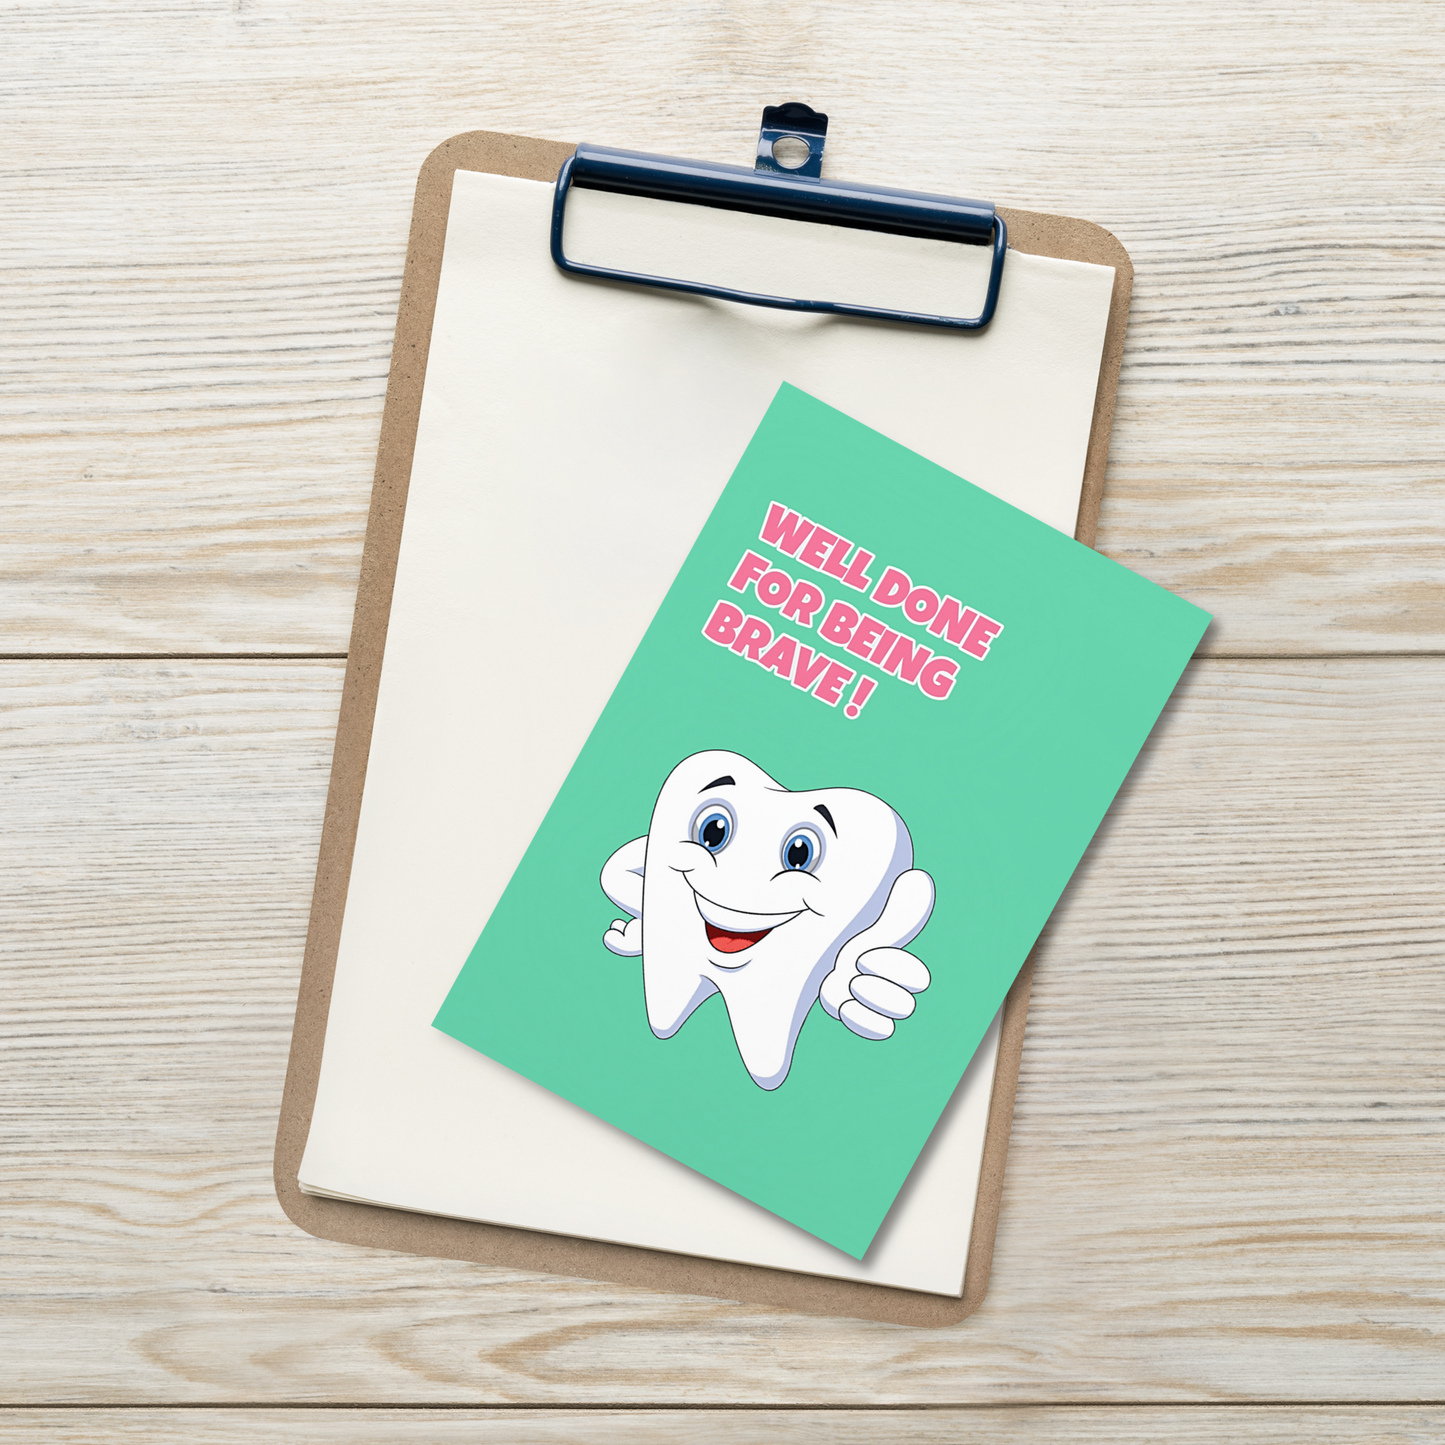 Dental Motivational & Reward Cards- Well Done For Being Brave!